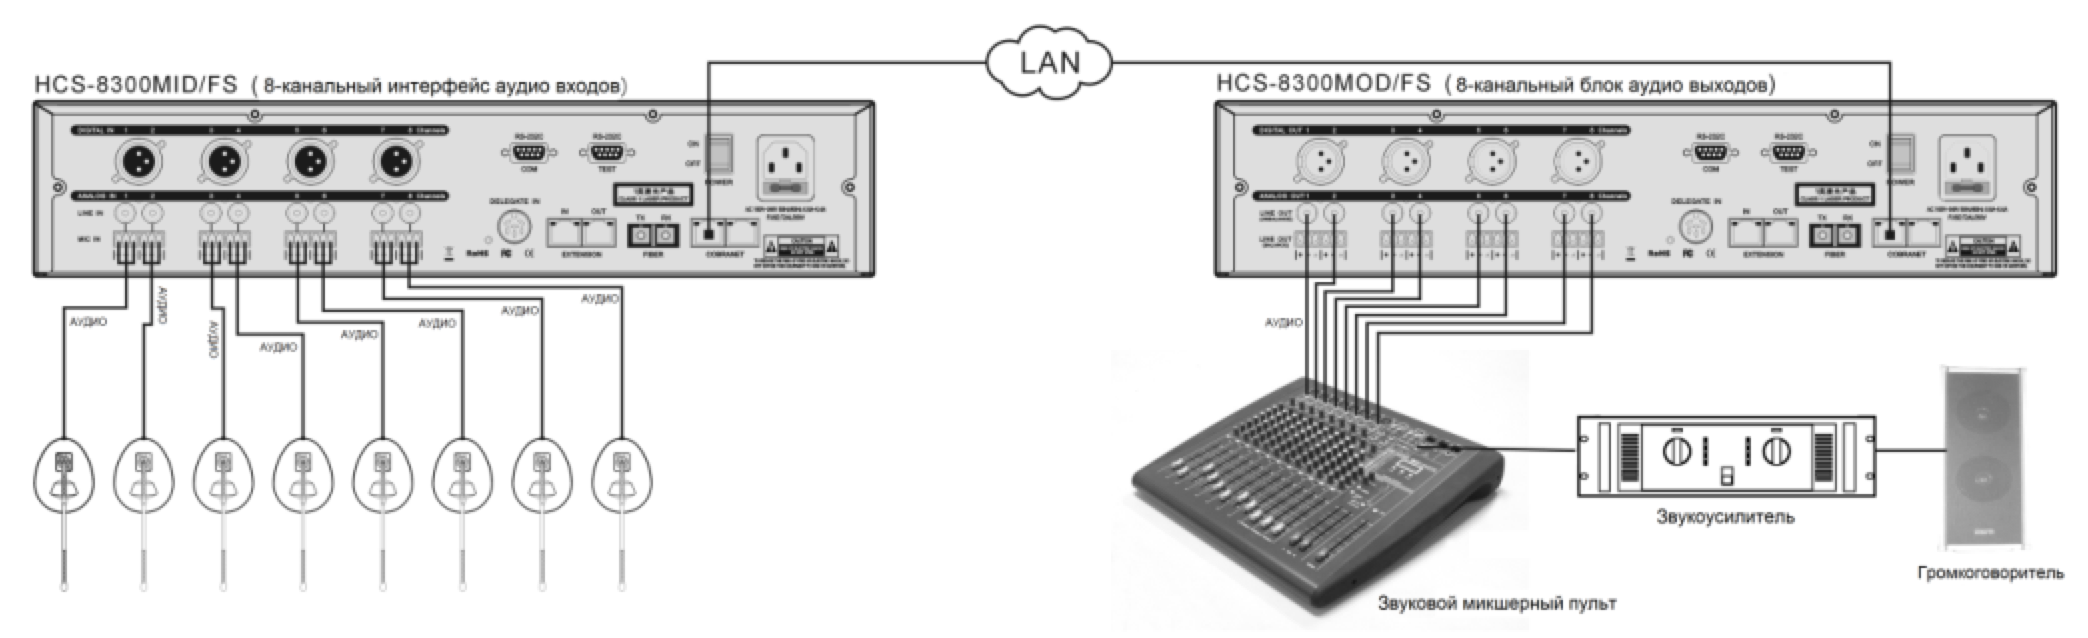 Схема подключения TAIDEN HCS-8300MID/FS